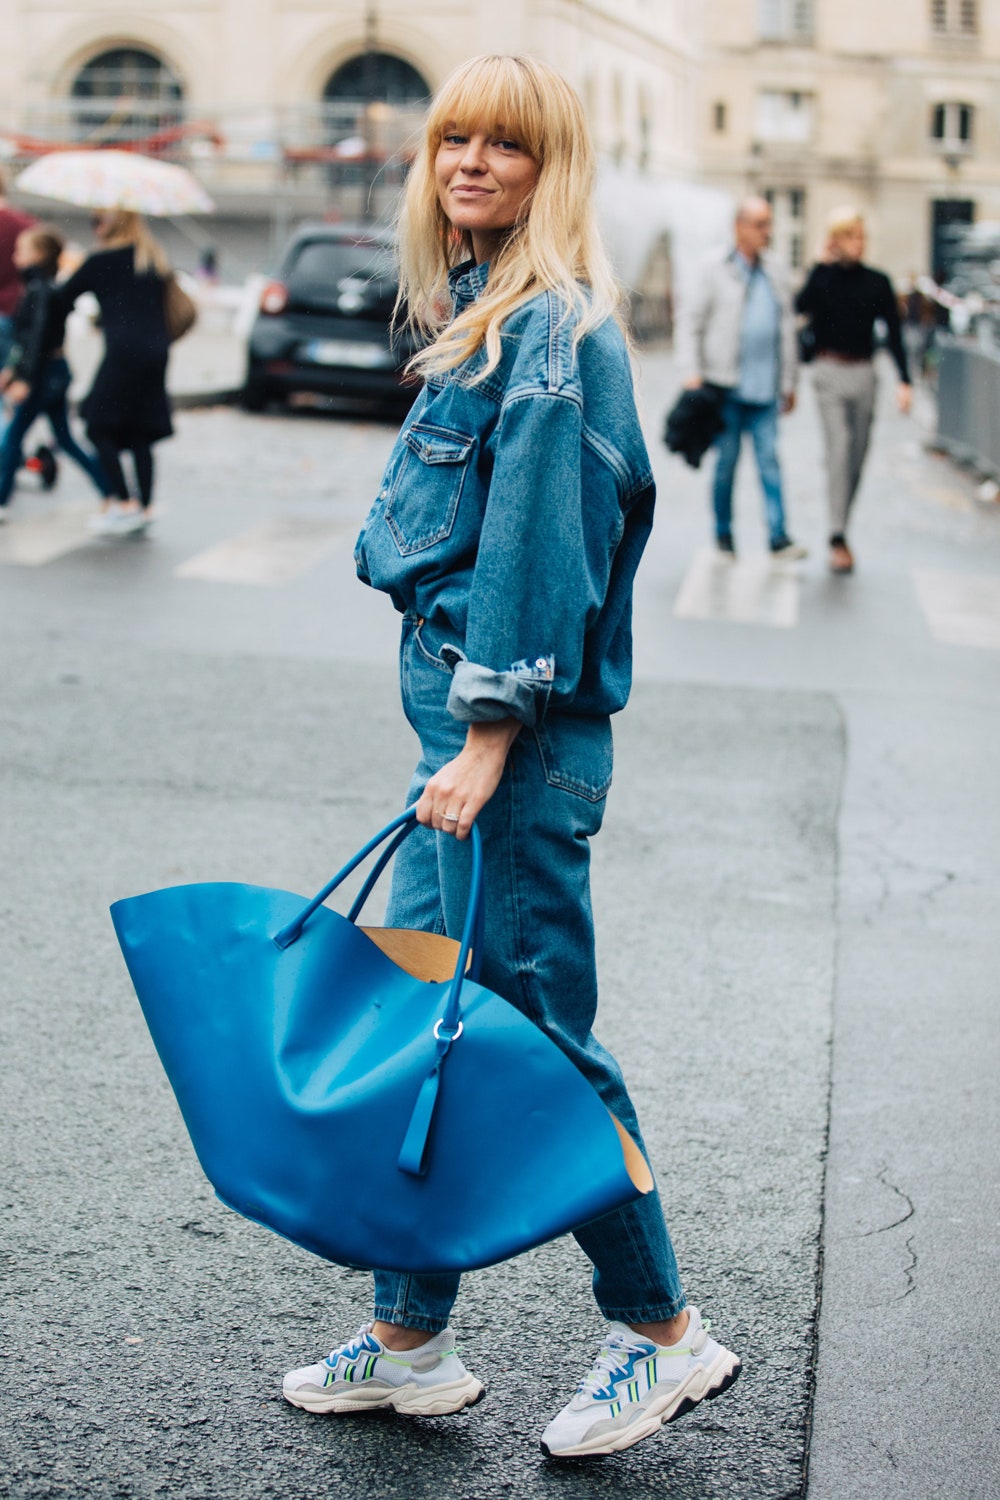 Жанетт Мэдсен с сумкой Jil Sander на Неделе моды в Париже сентябрь 2019